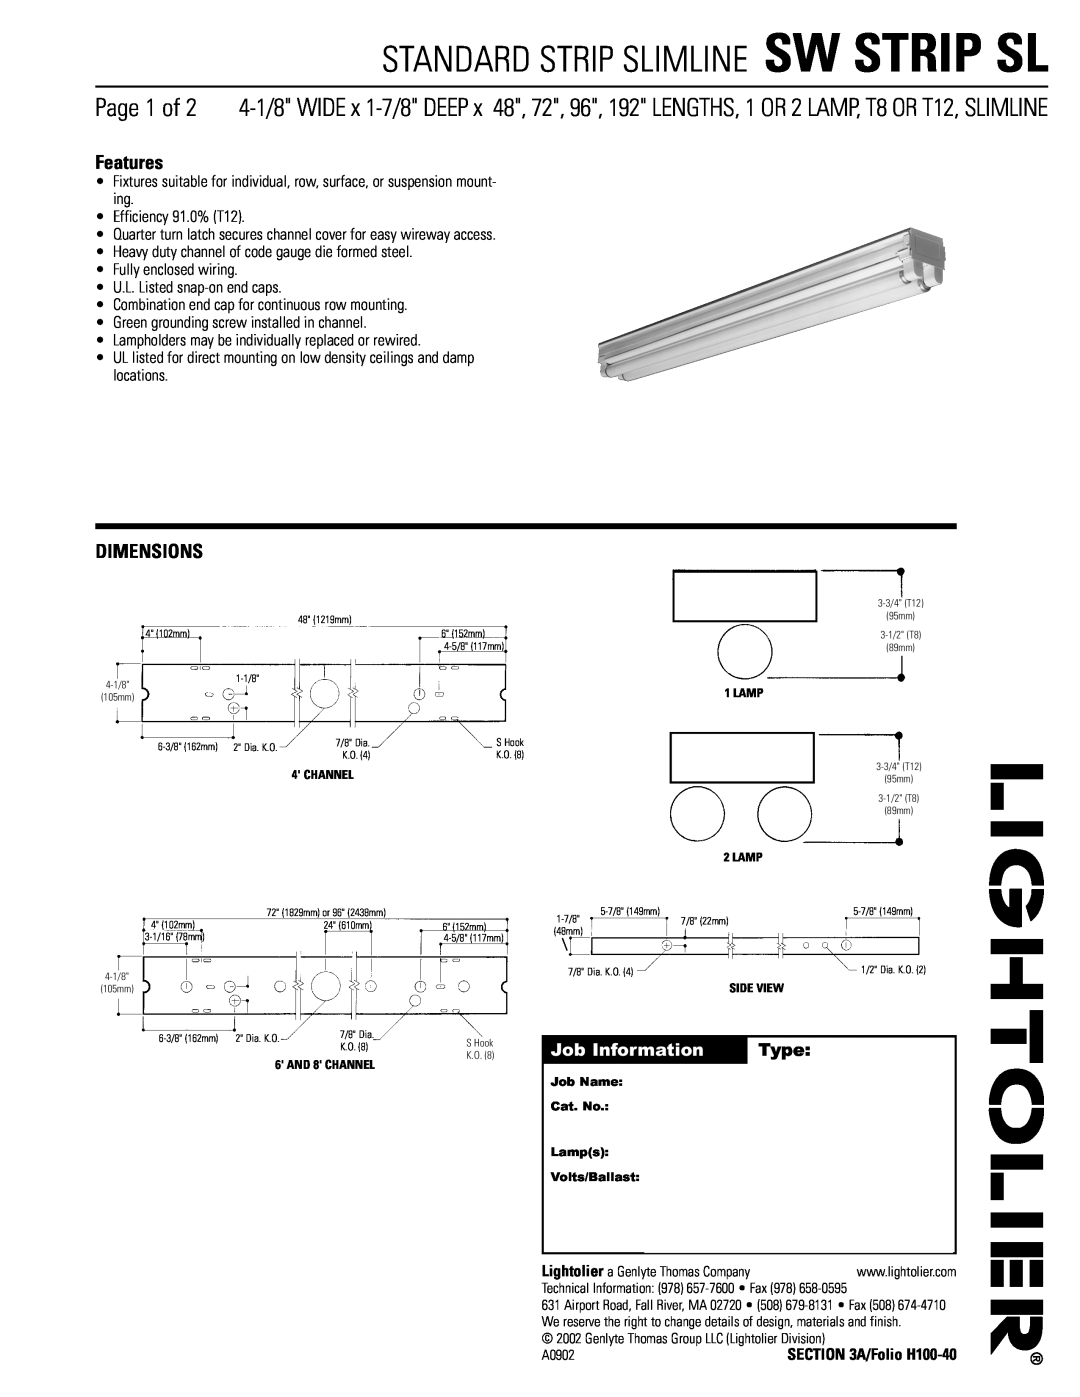 Lightolier SW STRIP SL dimensions Standard Strip Slimline Sw Strip Sl, Features, Dimensions, Job Information, Type 